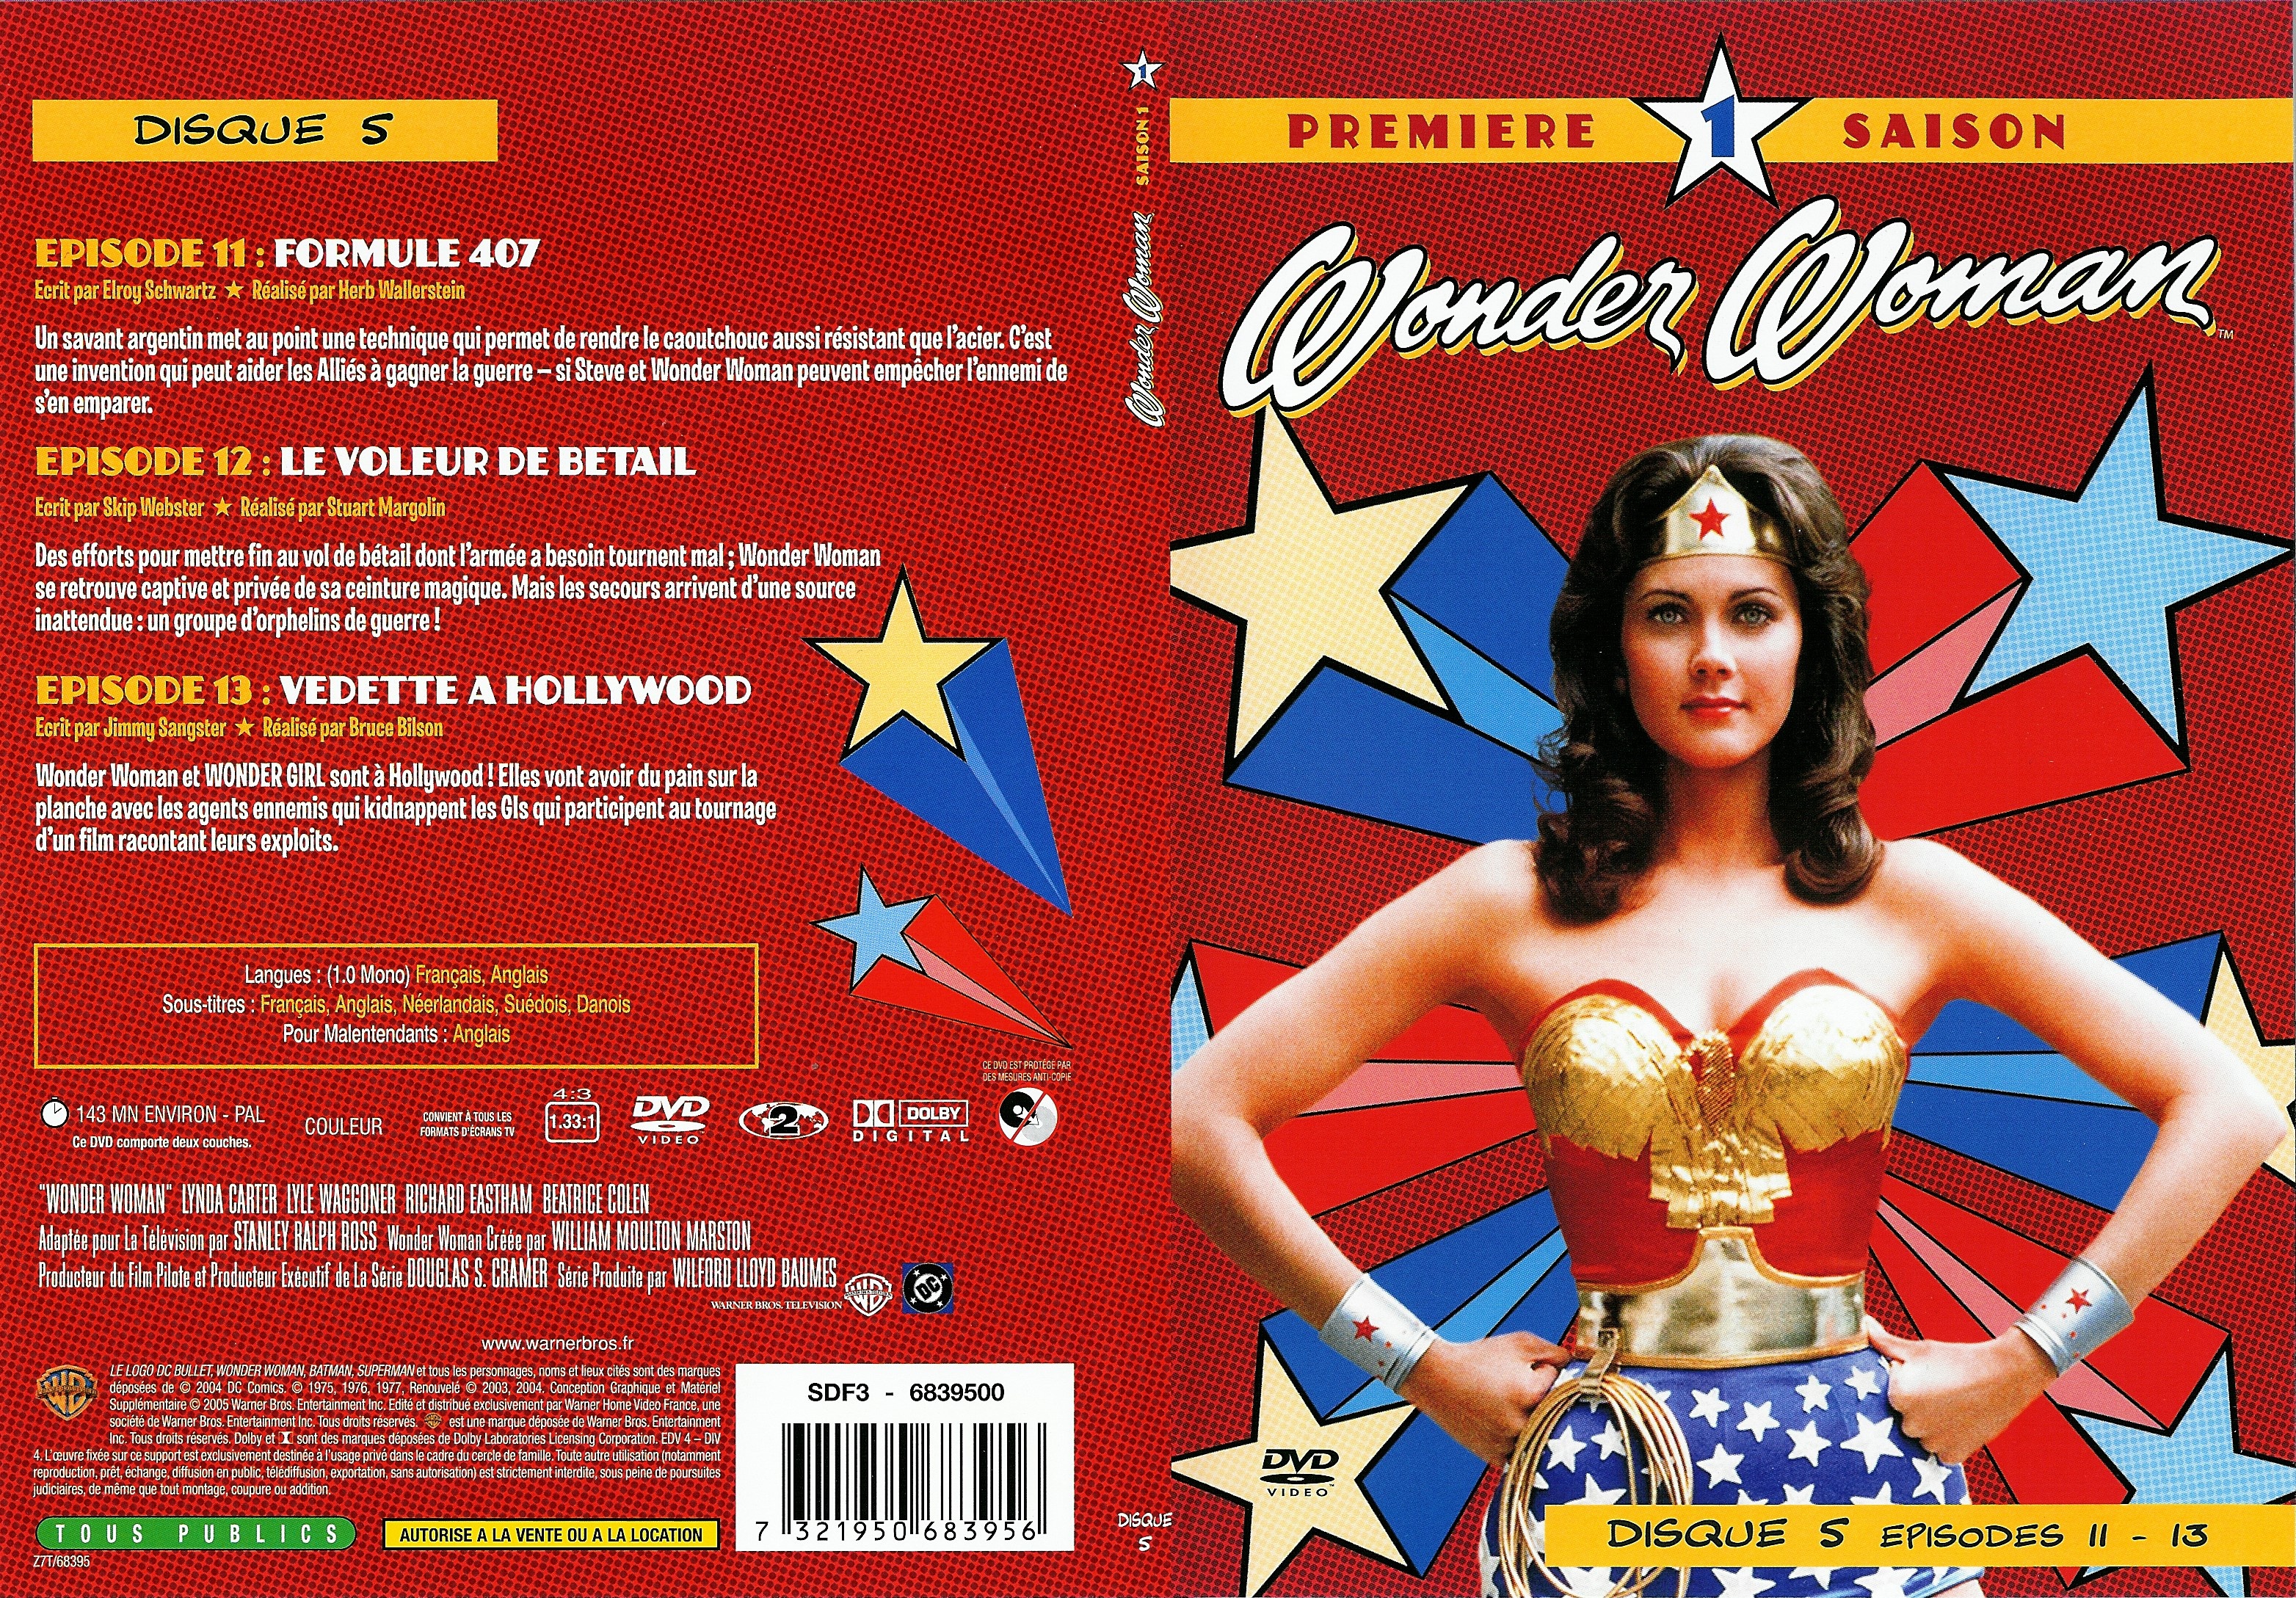 Jaquette DVD Wonder woman Saison 1 DVD 5